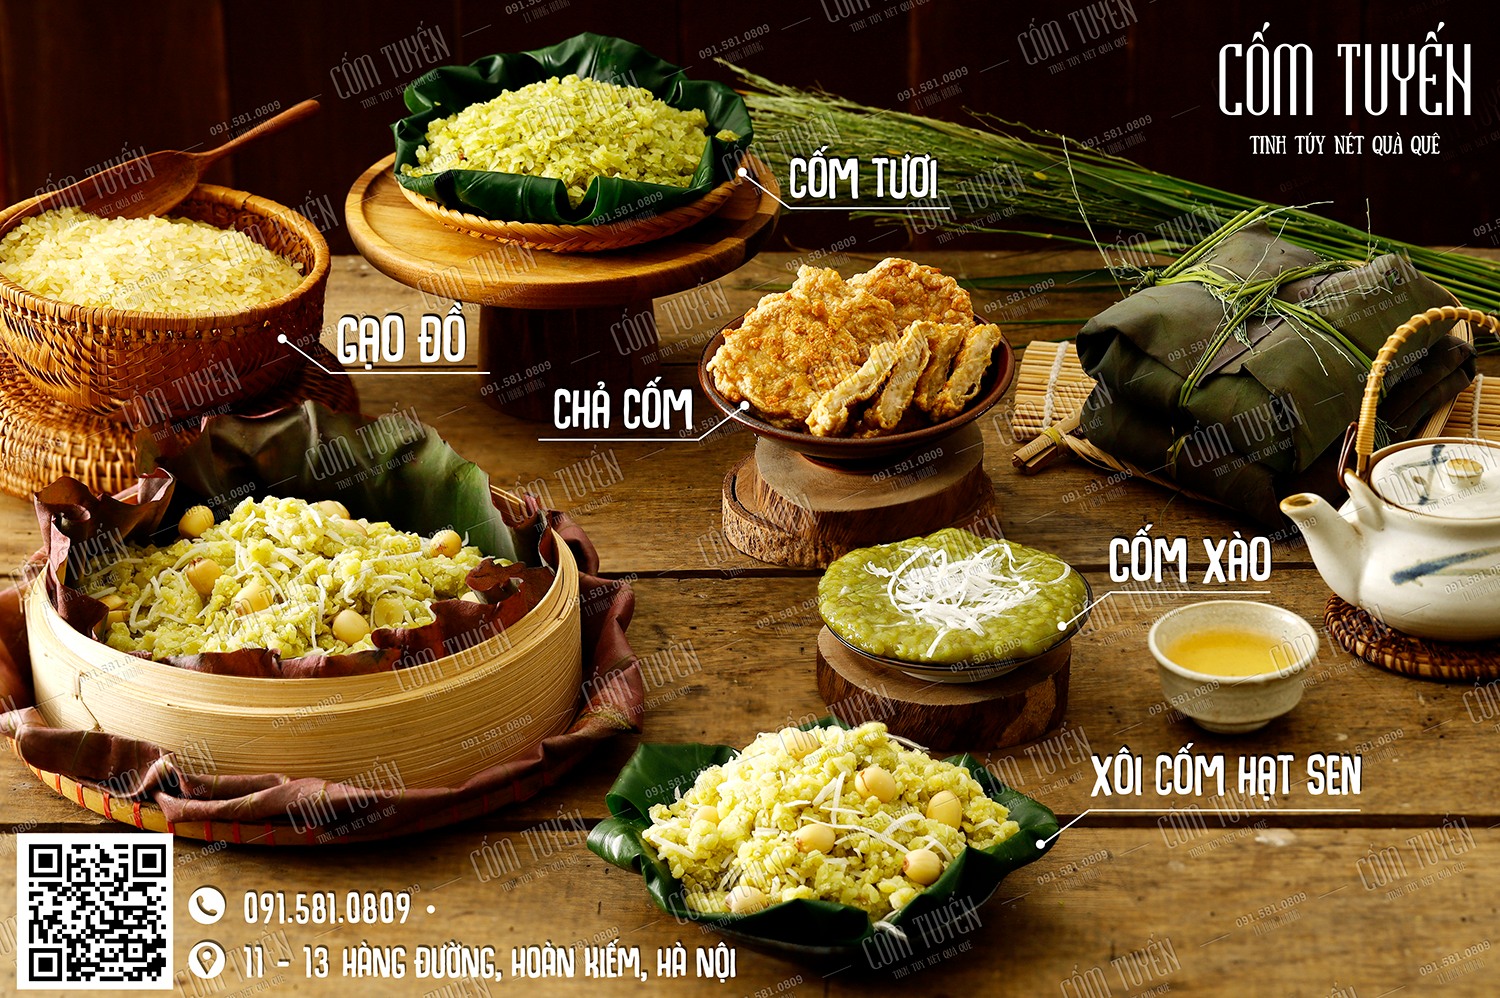 Tuyen's Green Rice Flake Delicacies on Hang Duong Street